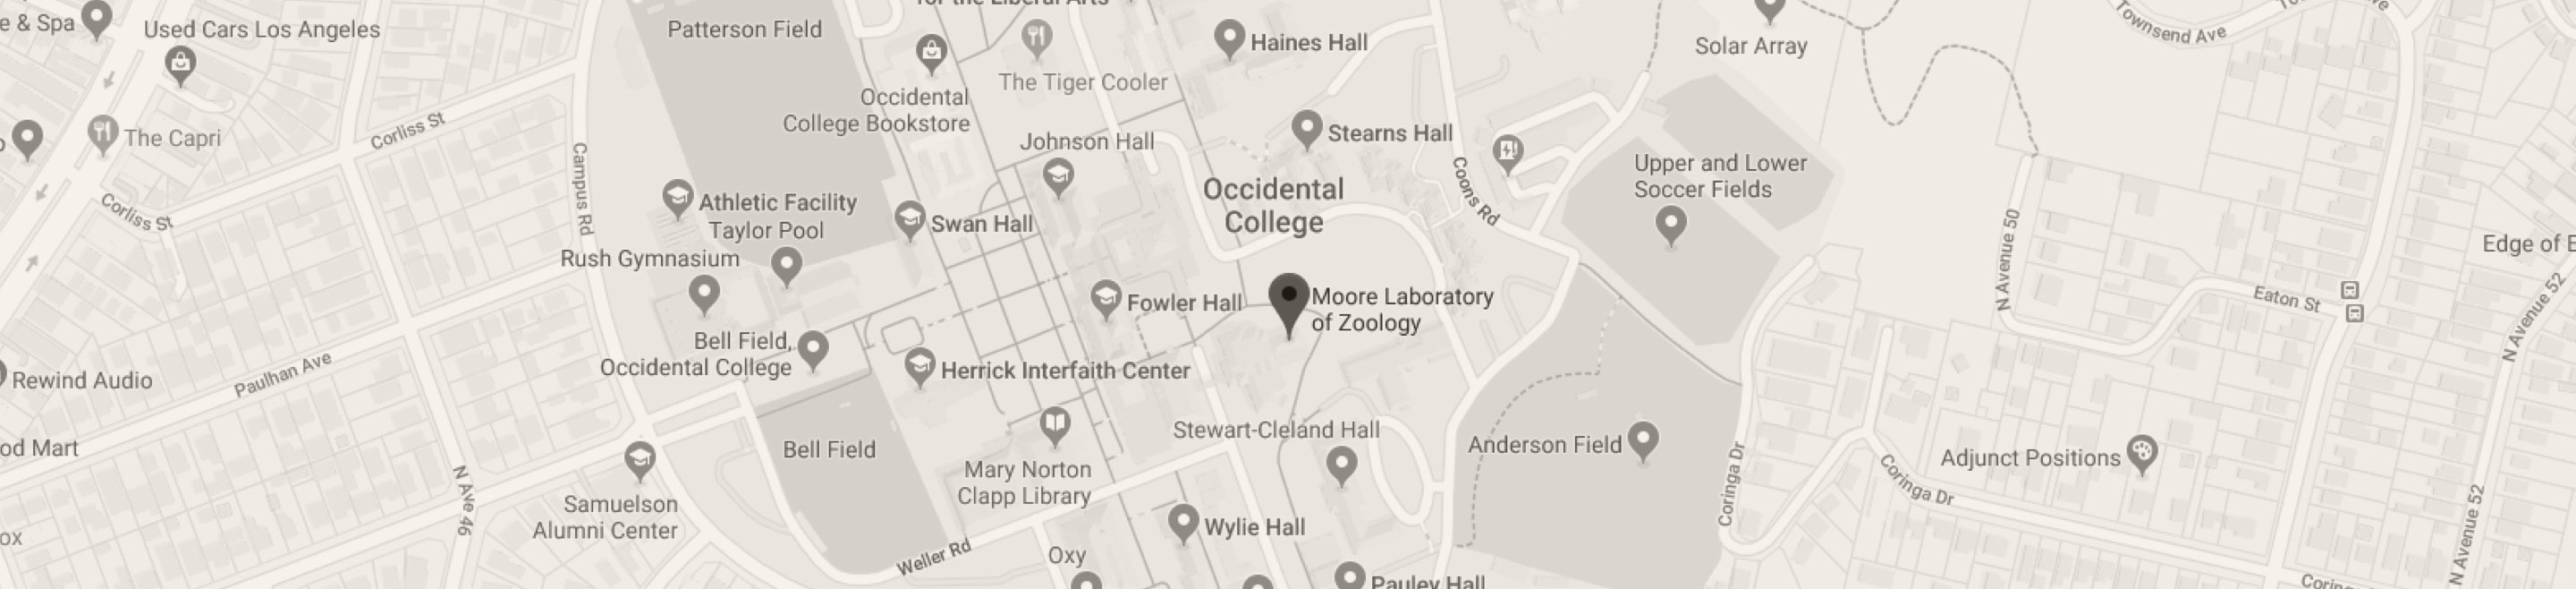 Google Map Screenshot of Moore Lab Location